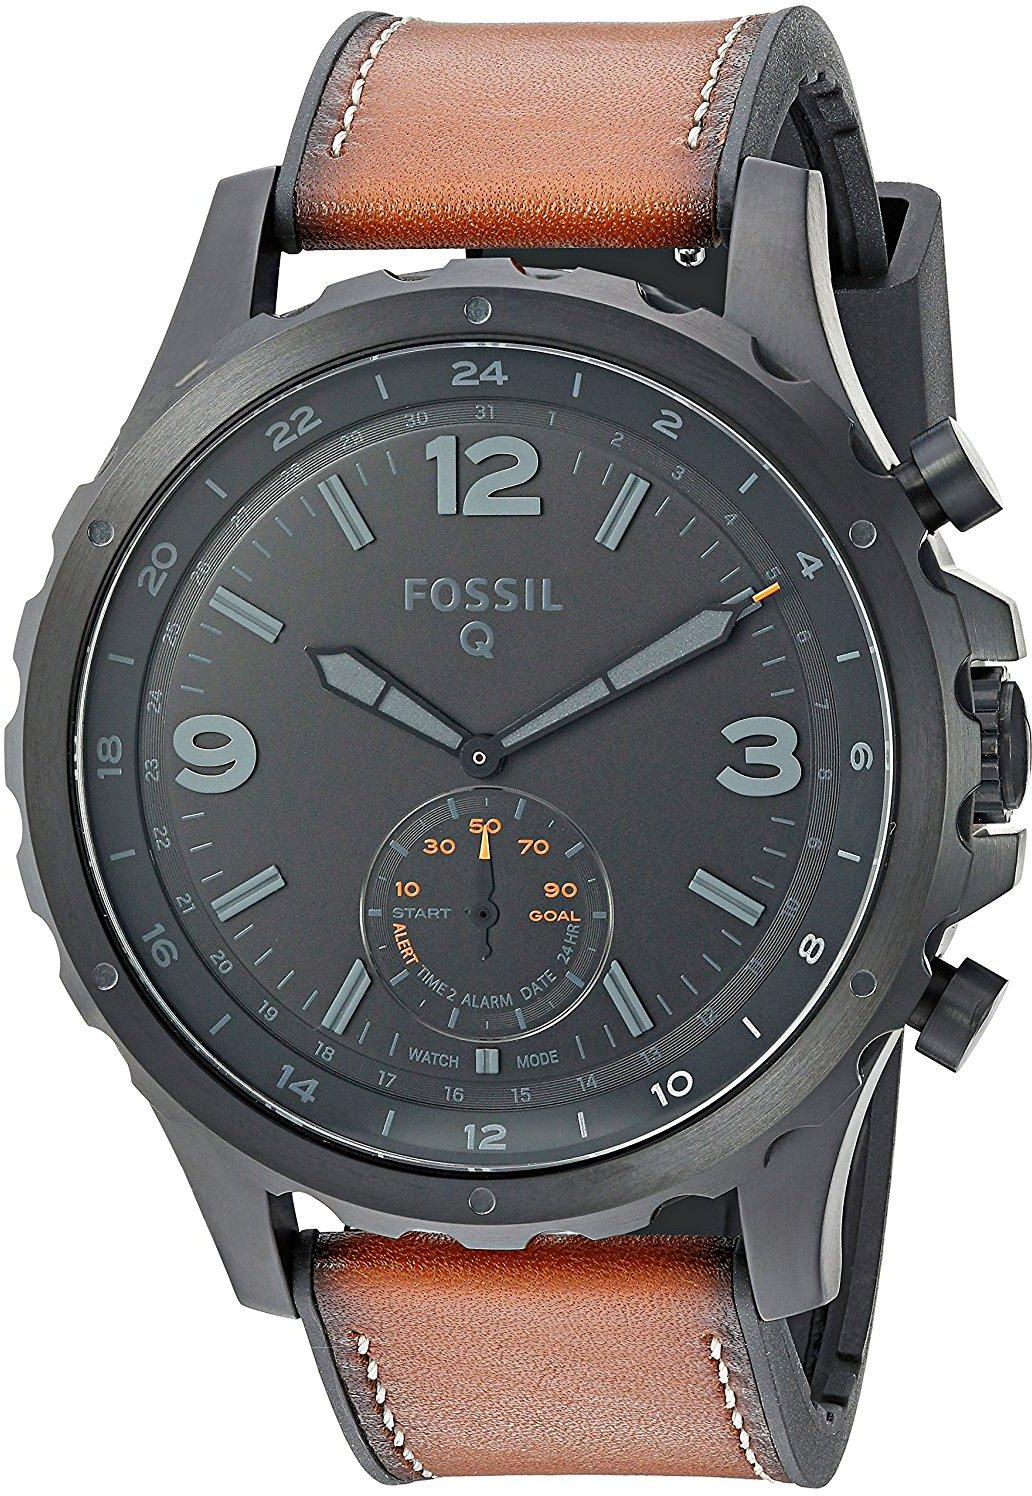 Fossil Men's Q-Nate Black Dial Brown Leather Quartz Hybrid Smartwatch